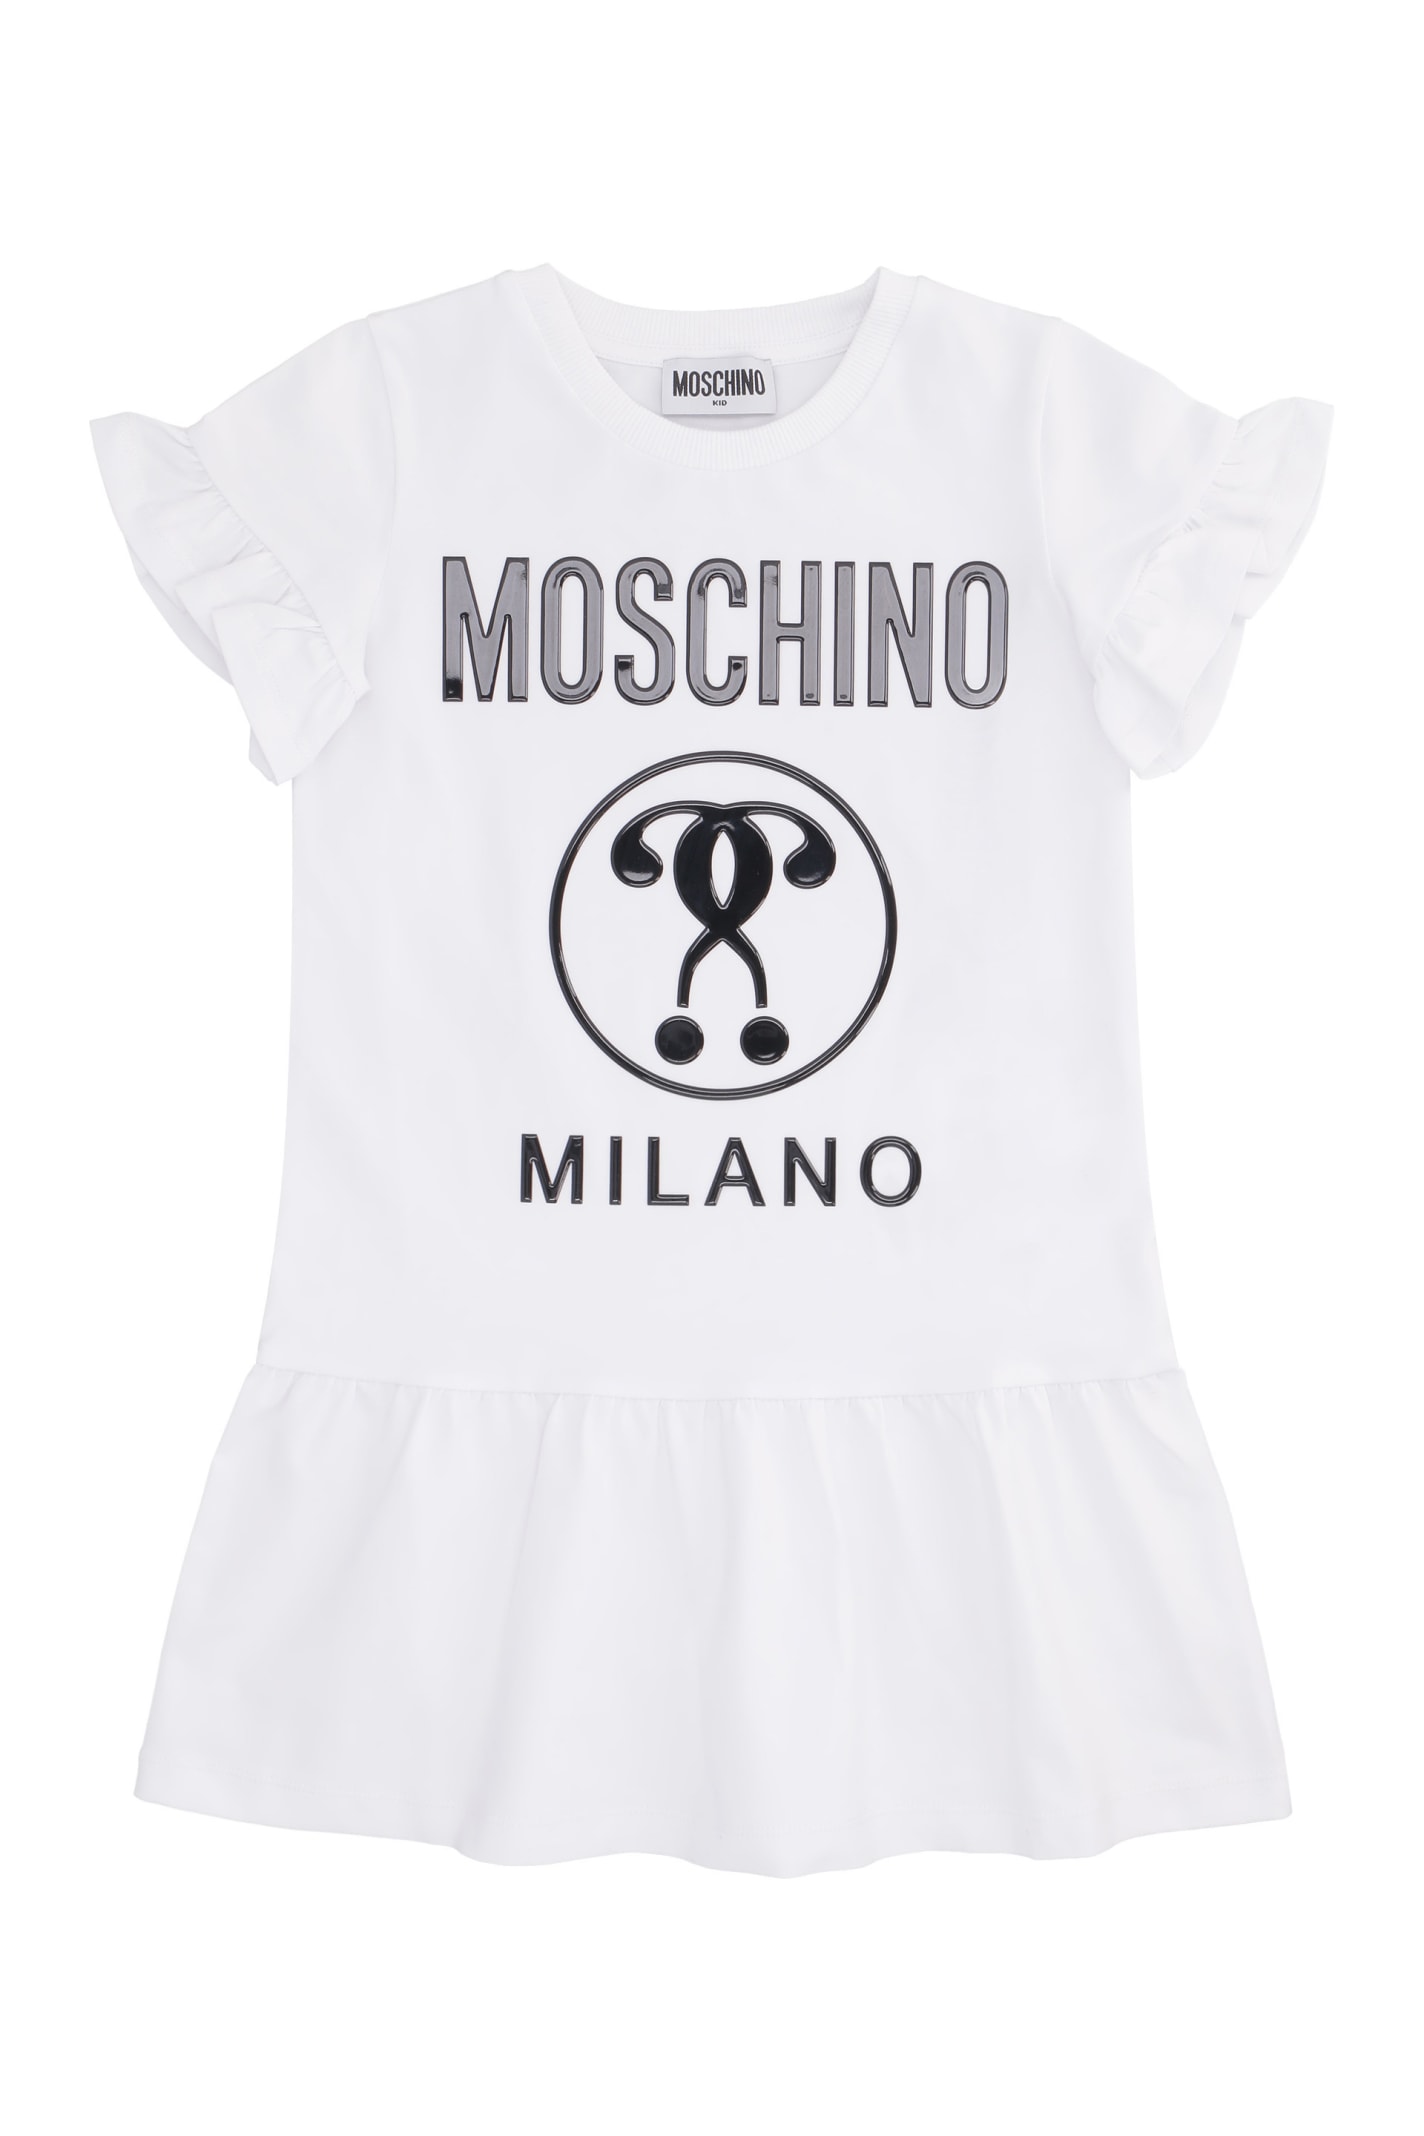 Moschino Cotton T-shirt Dress